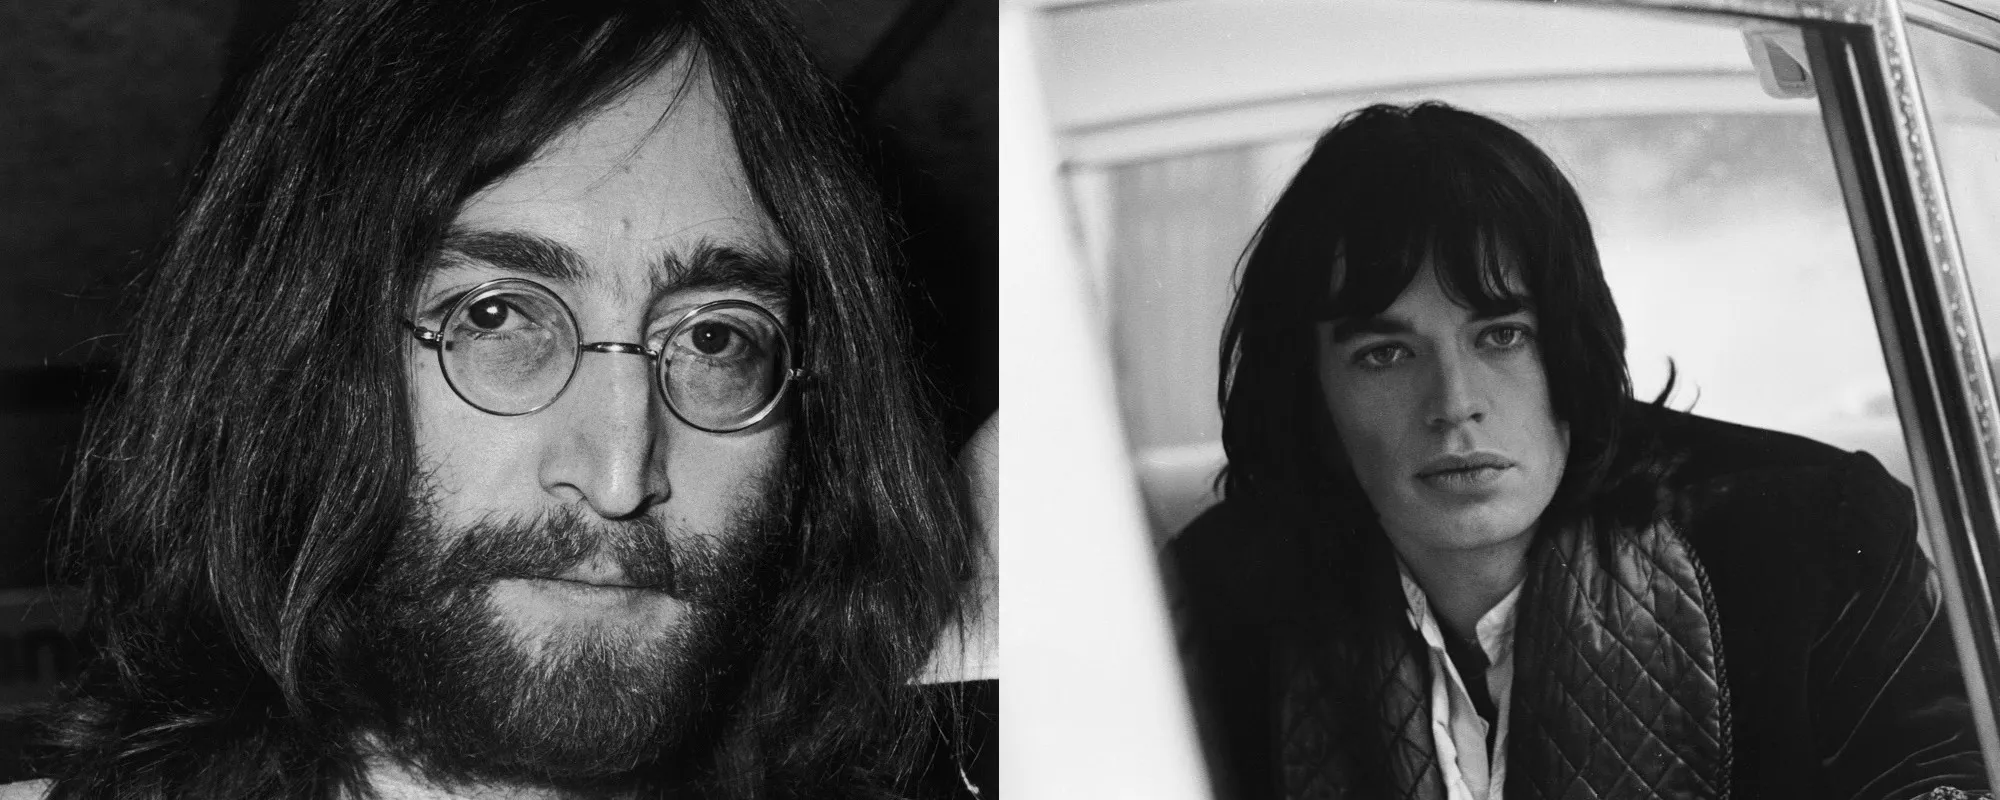 New Beatles Book Discloses “Very Uncomfortable” John Lennon-Mick Jagger Interaction